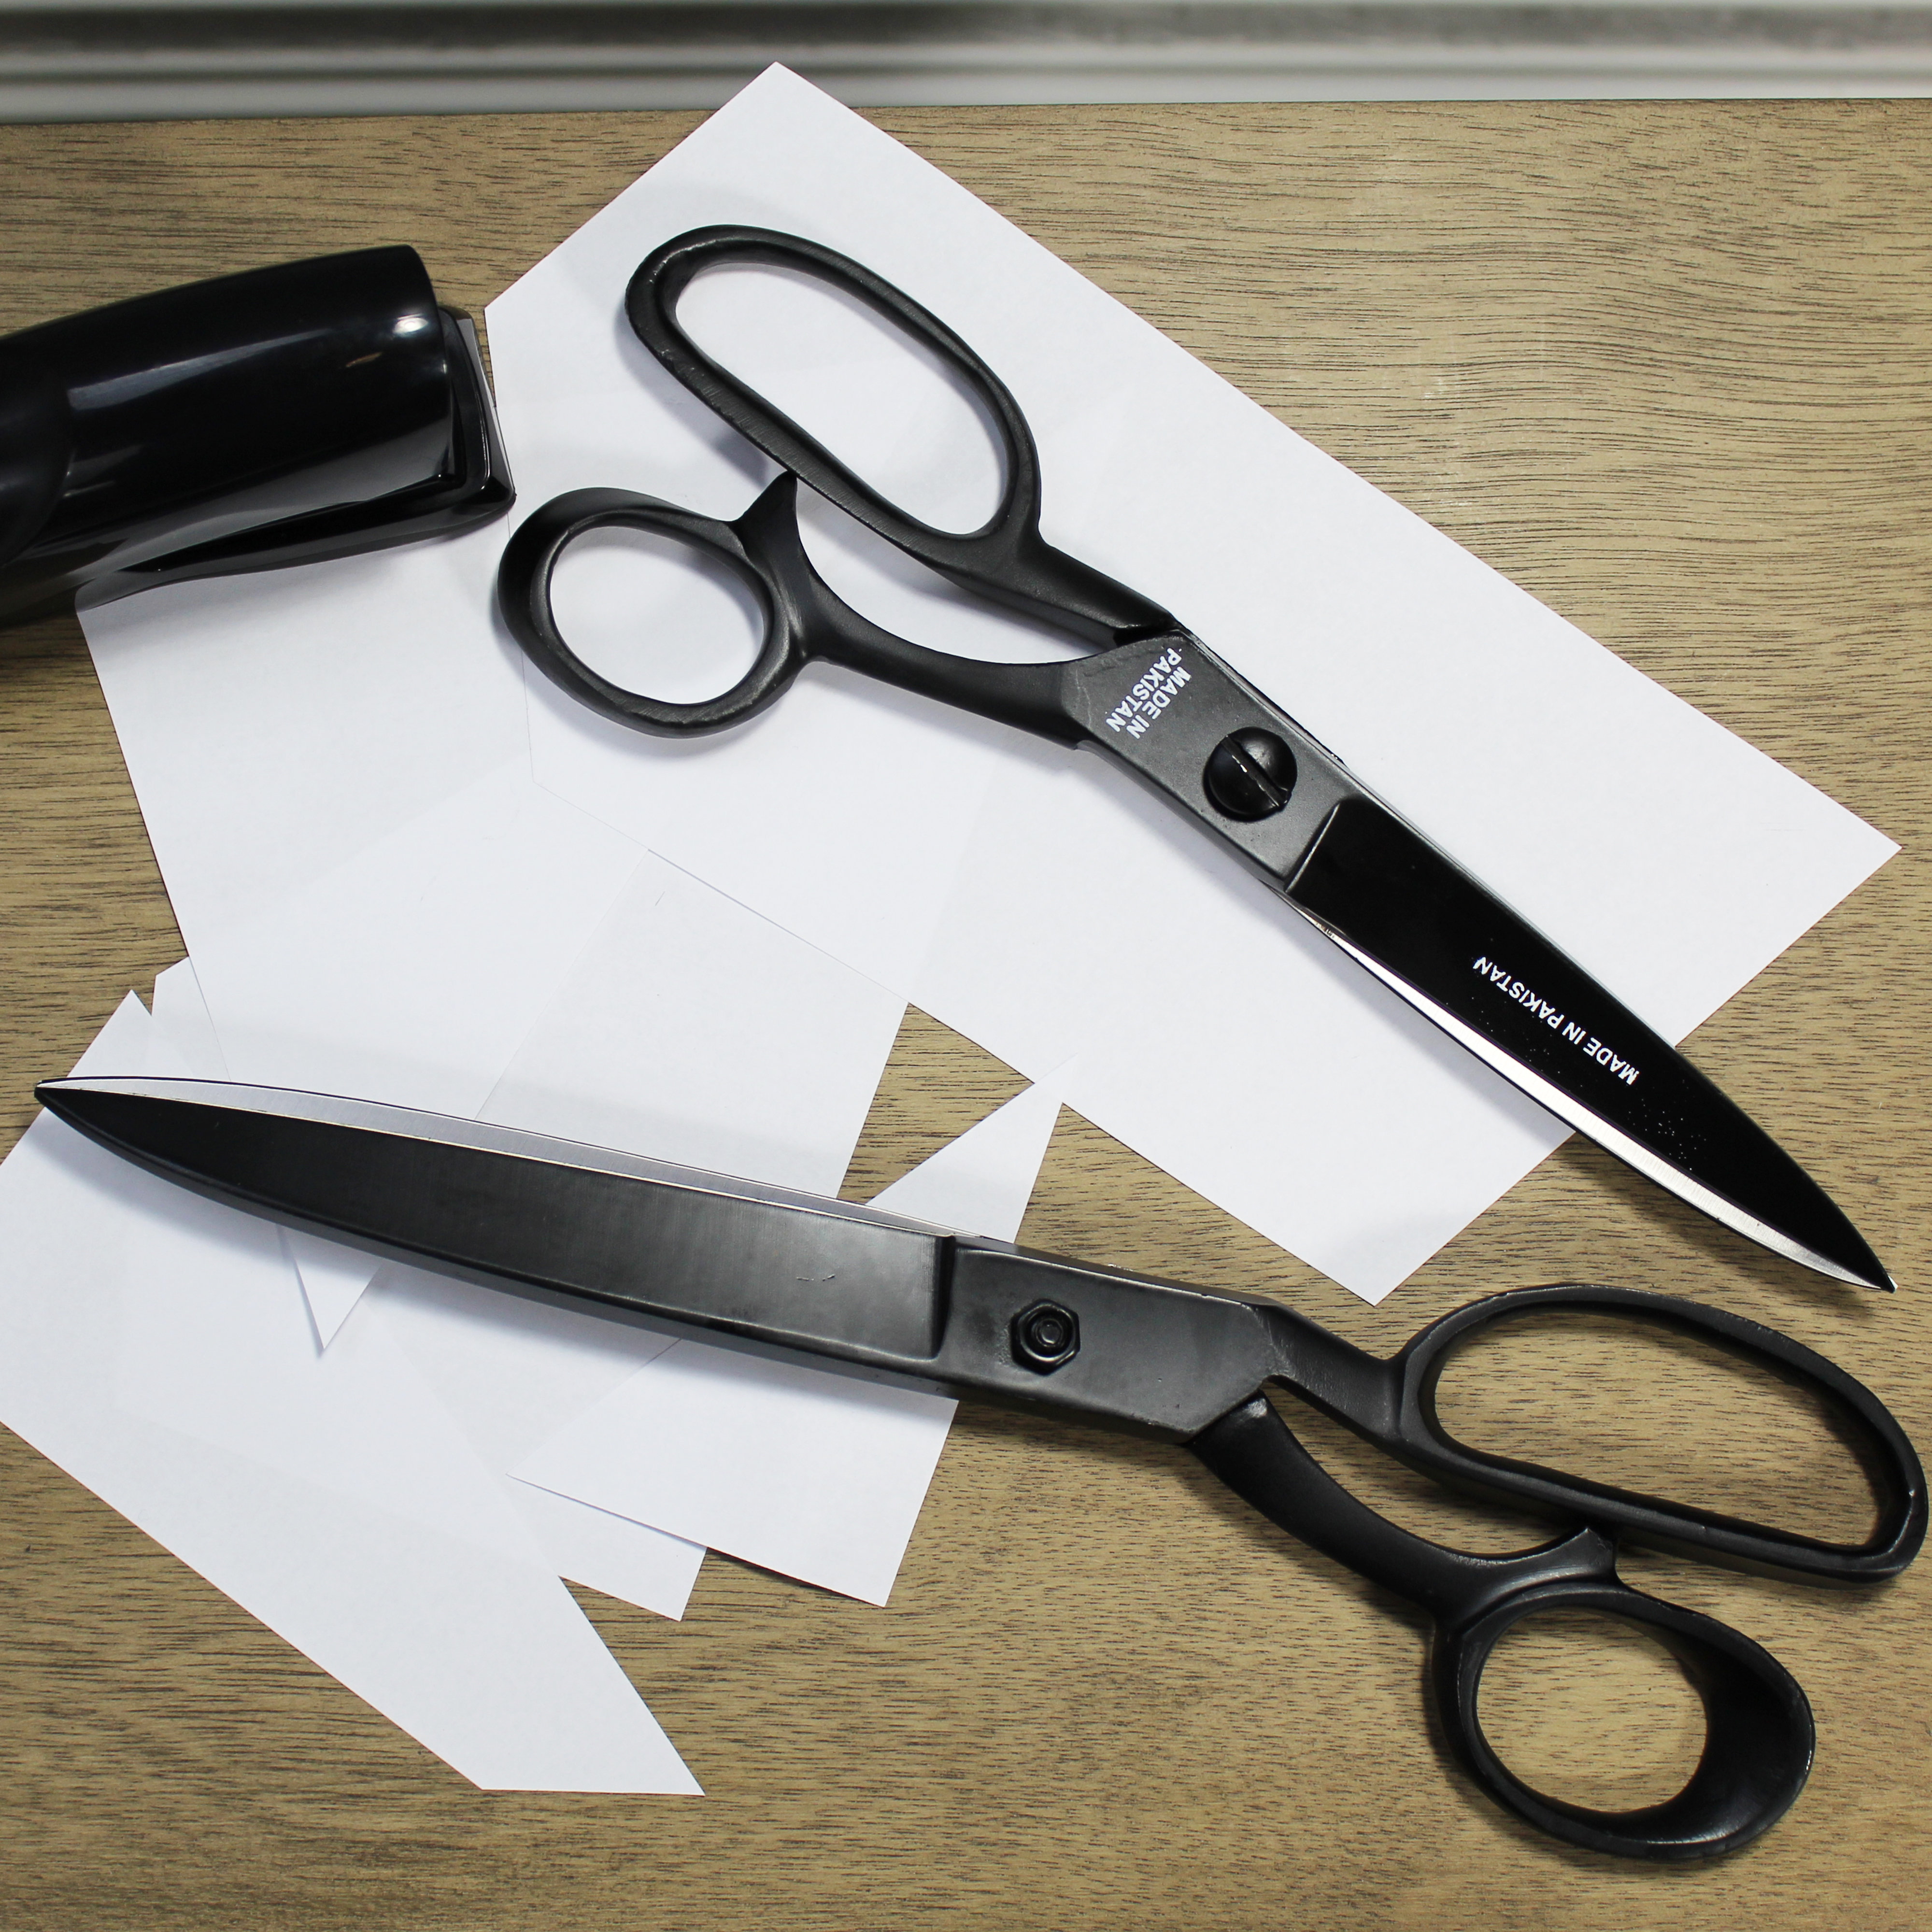 CHEFAMZ Kitchen Scissors,Stainless Steel Heavy Duty Kitchen Shears